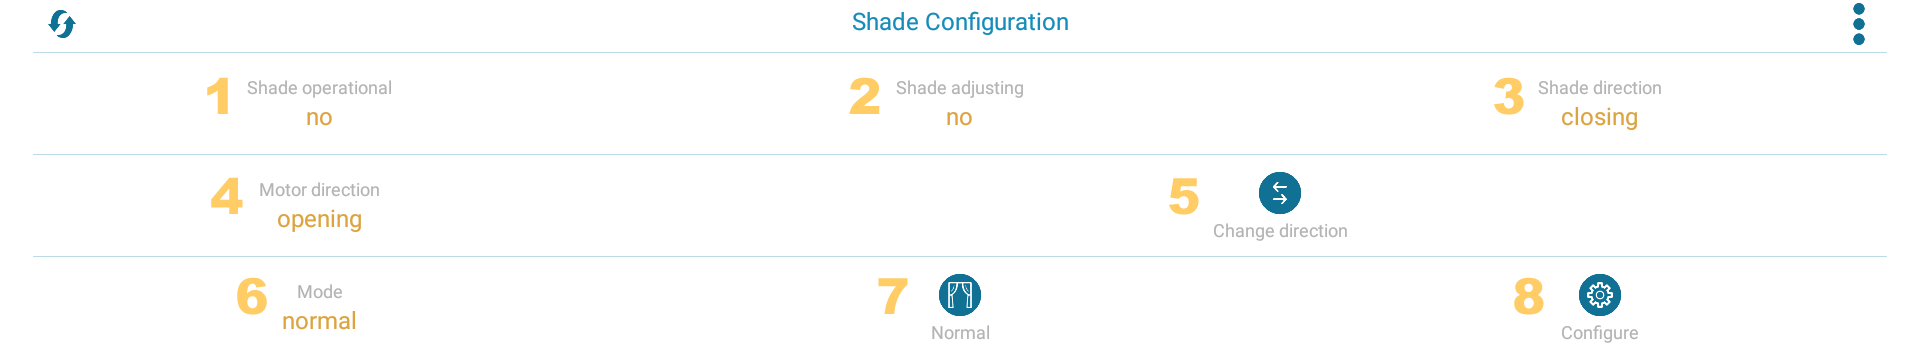 shade configuration